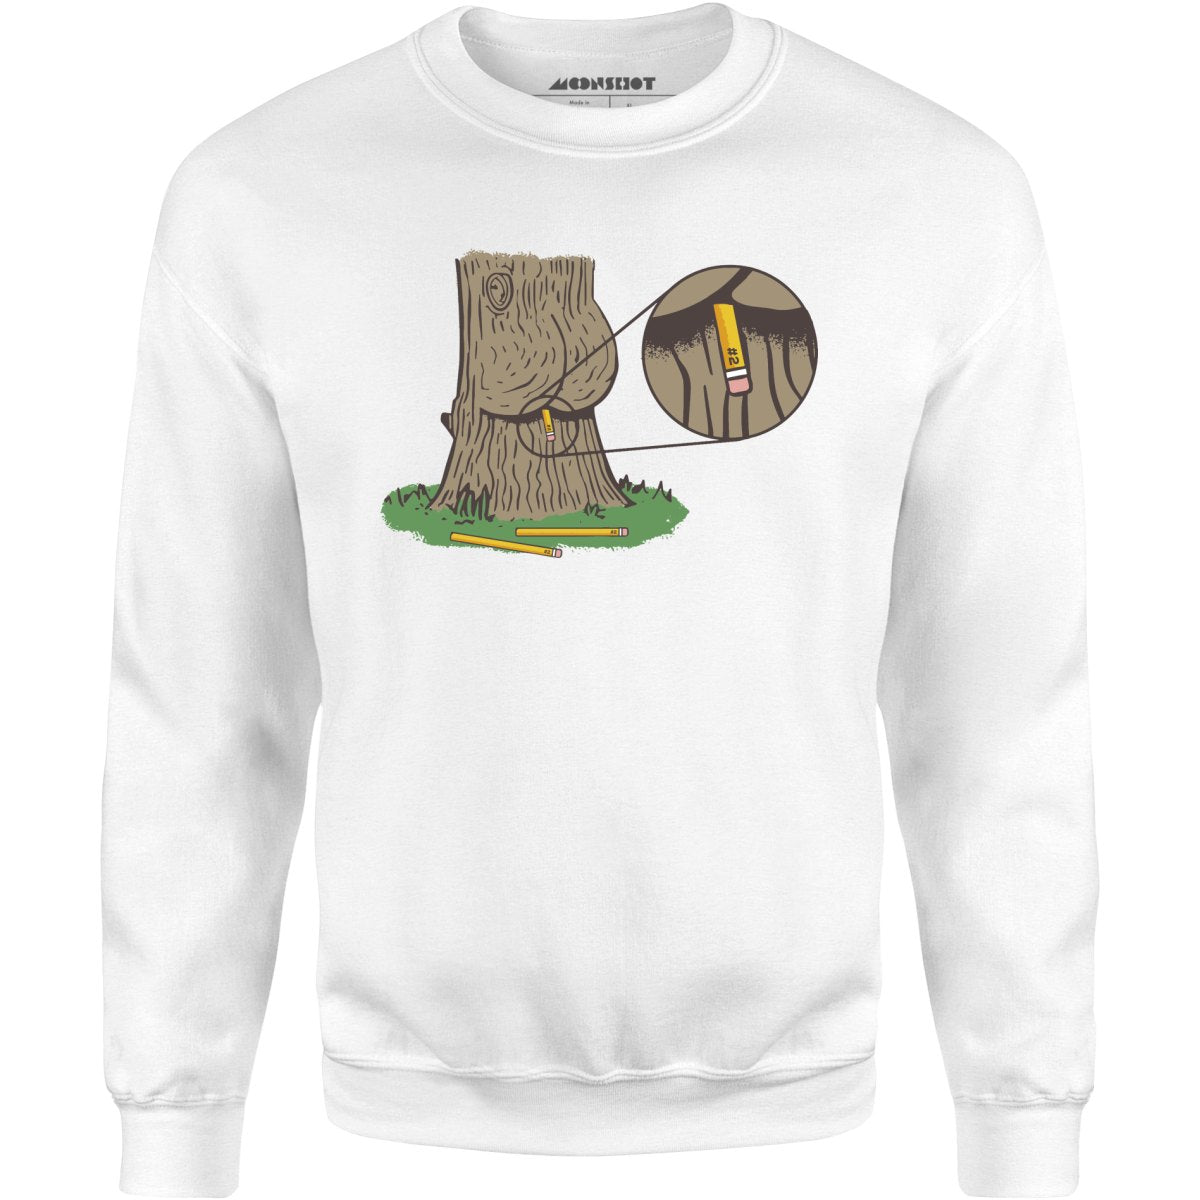 Do Trees Poop? - Unisex Sweatshirt